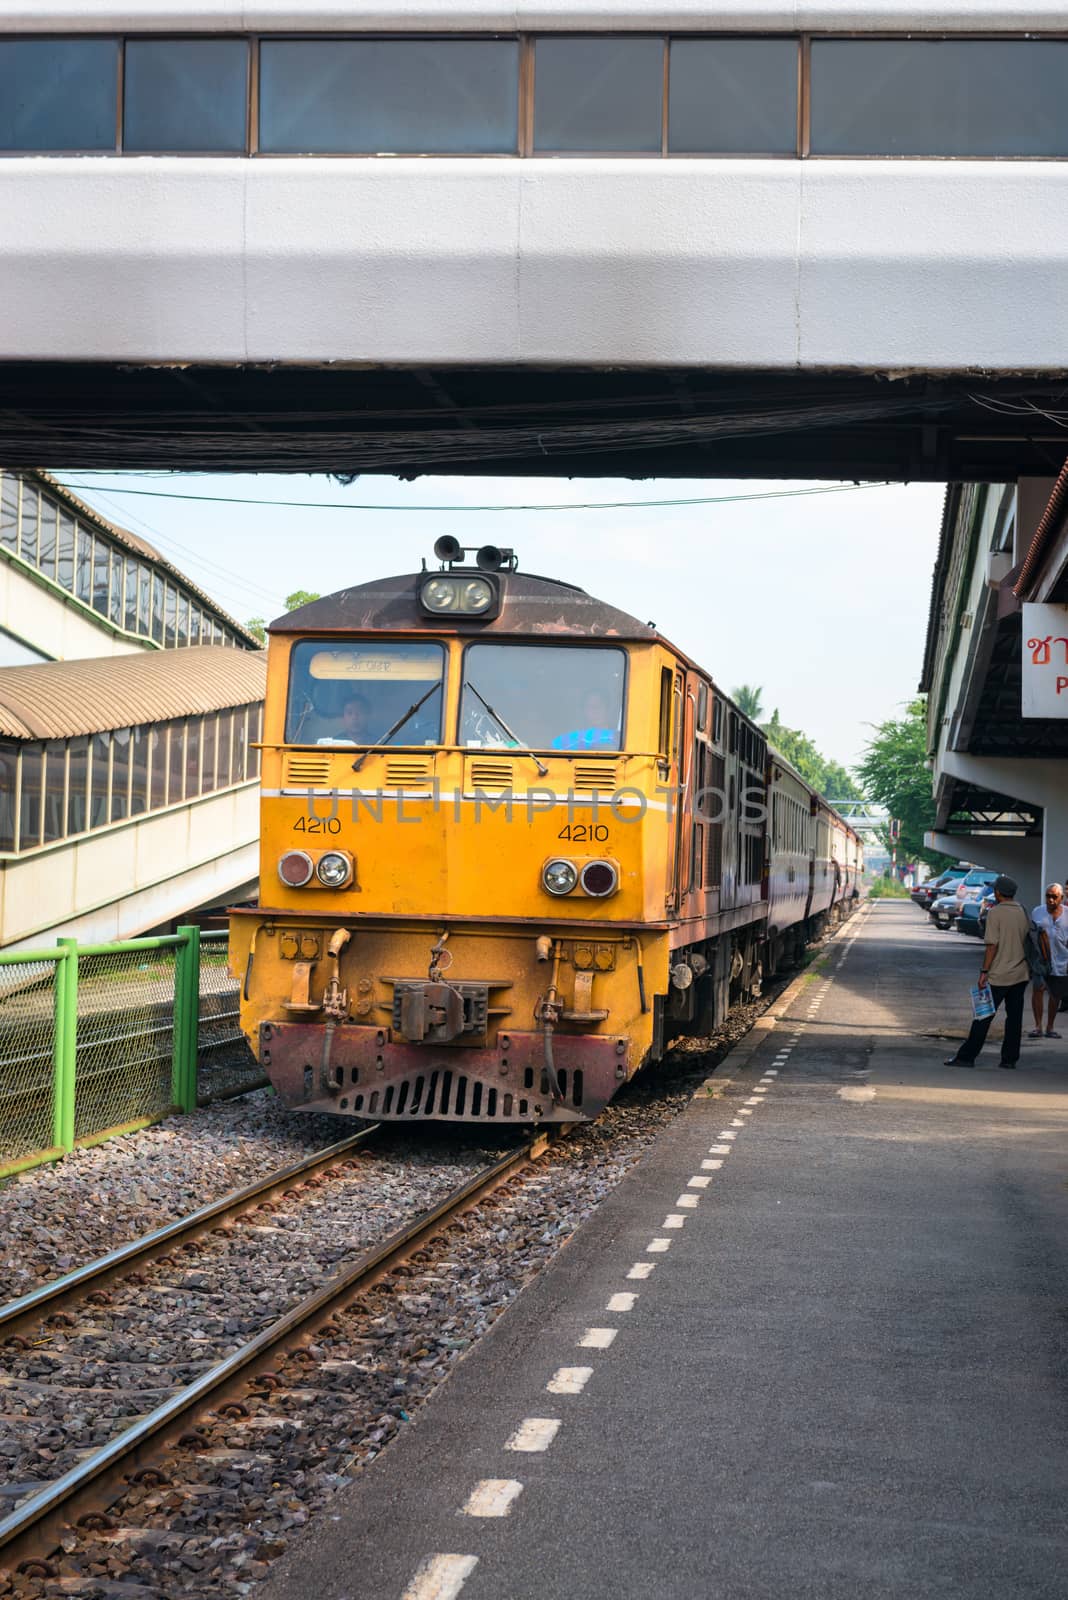 Locomotive with train arrives at railway station in Thailand by iryna_rasko